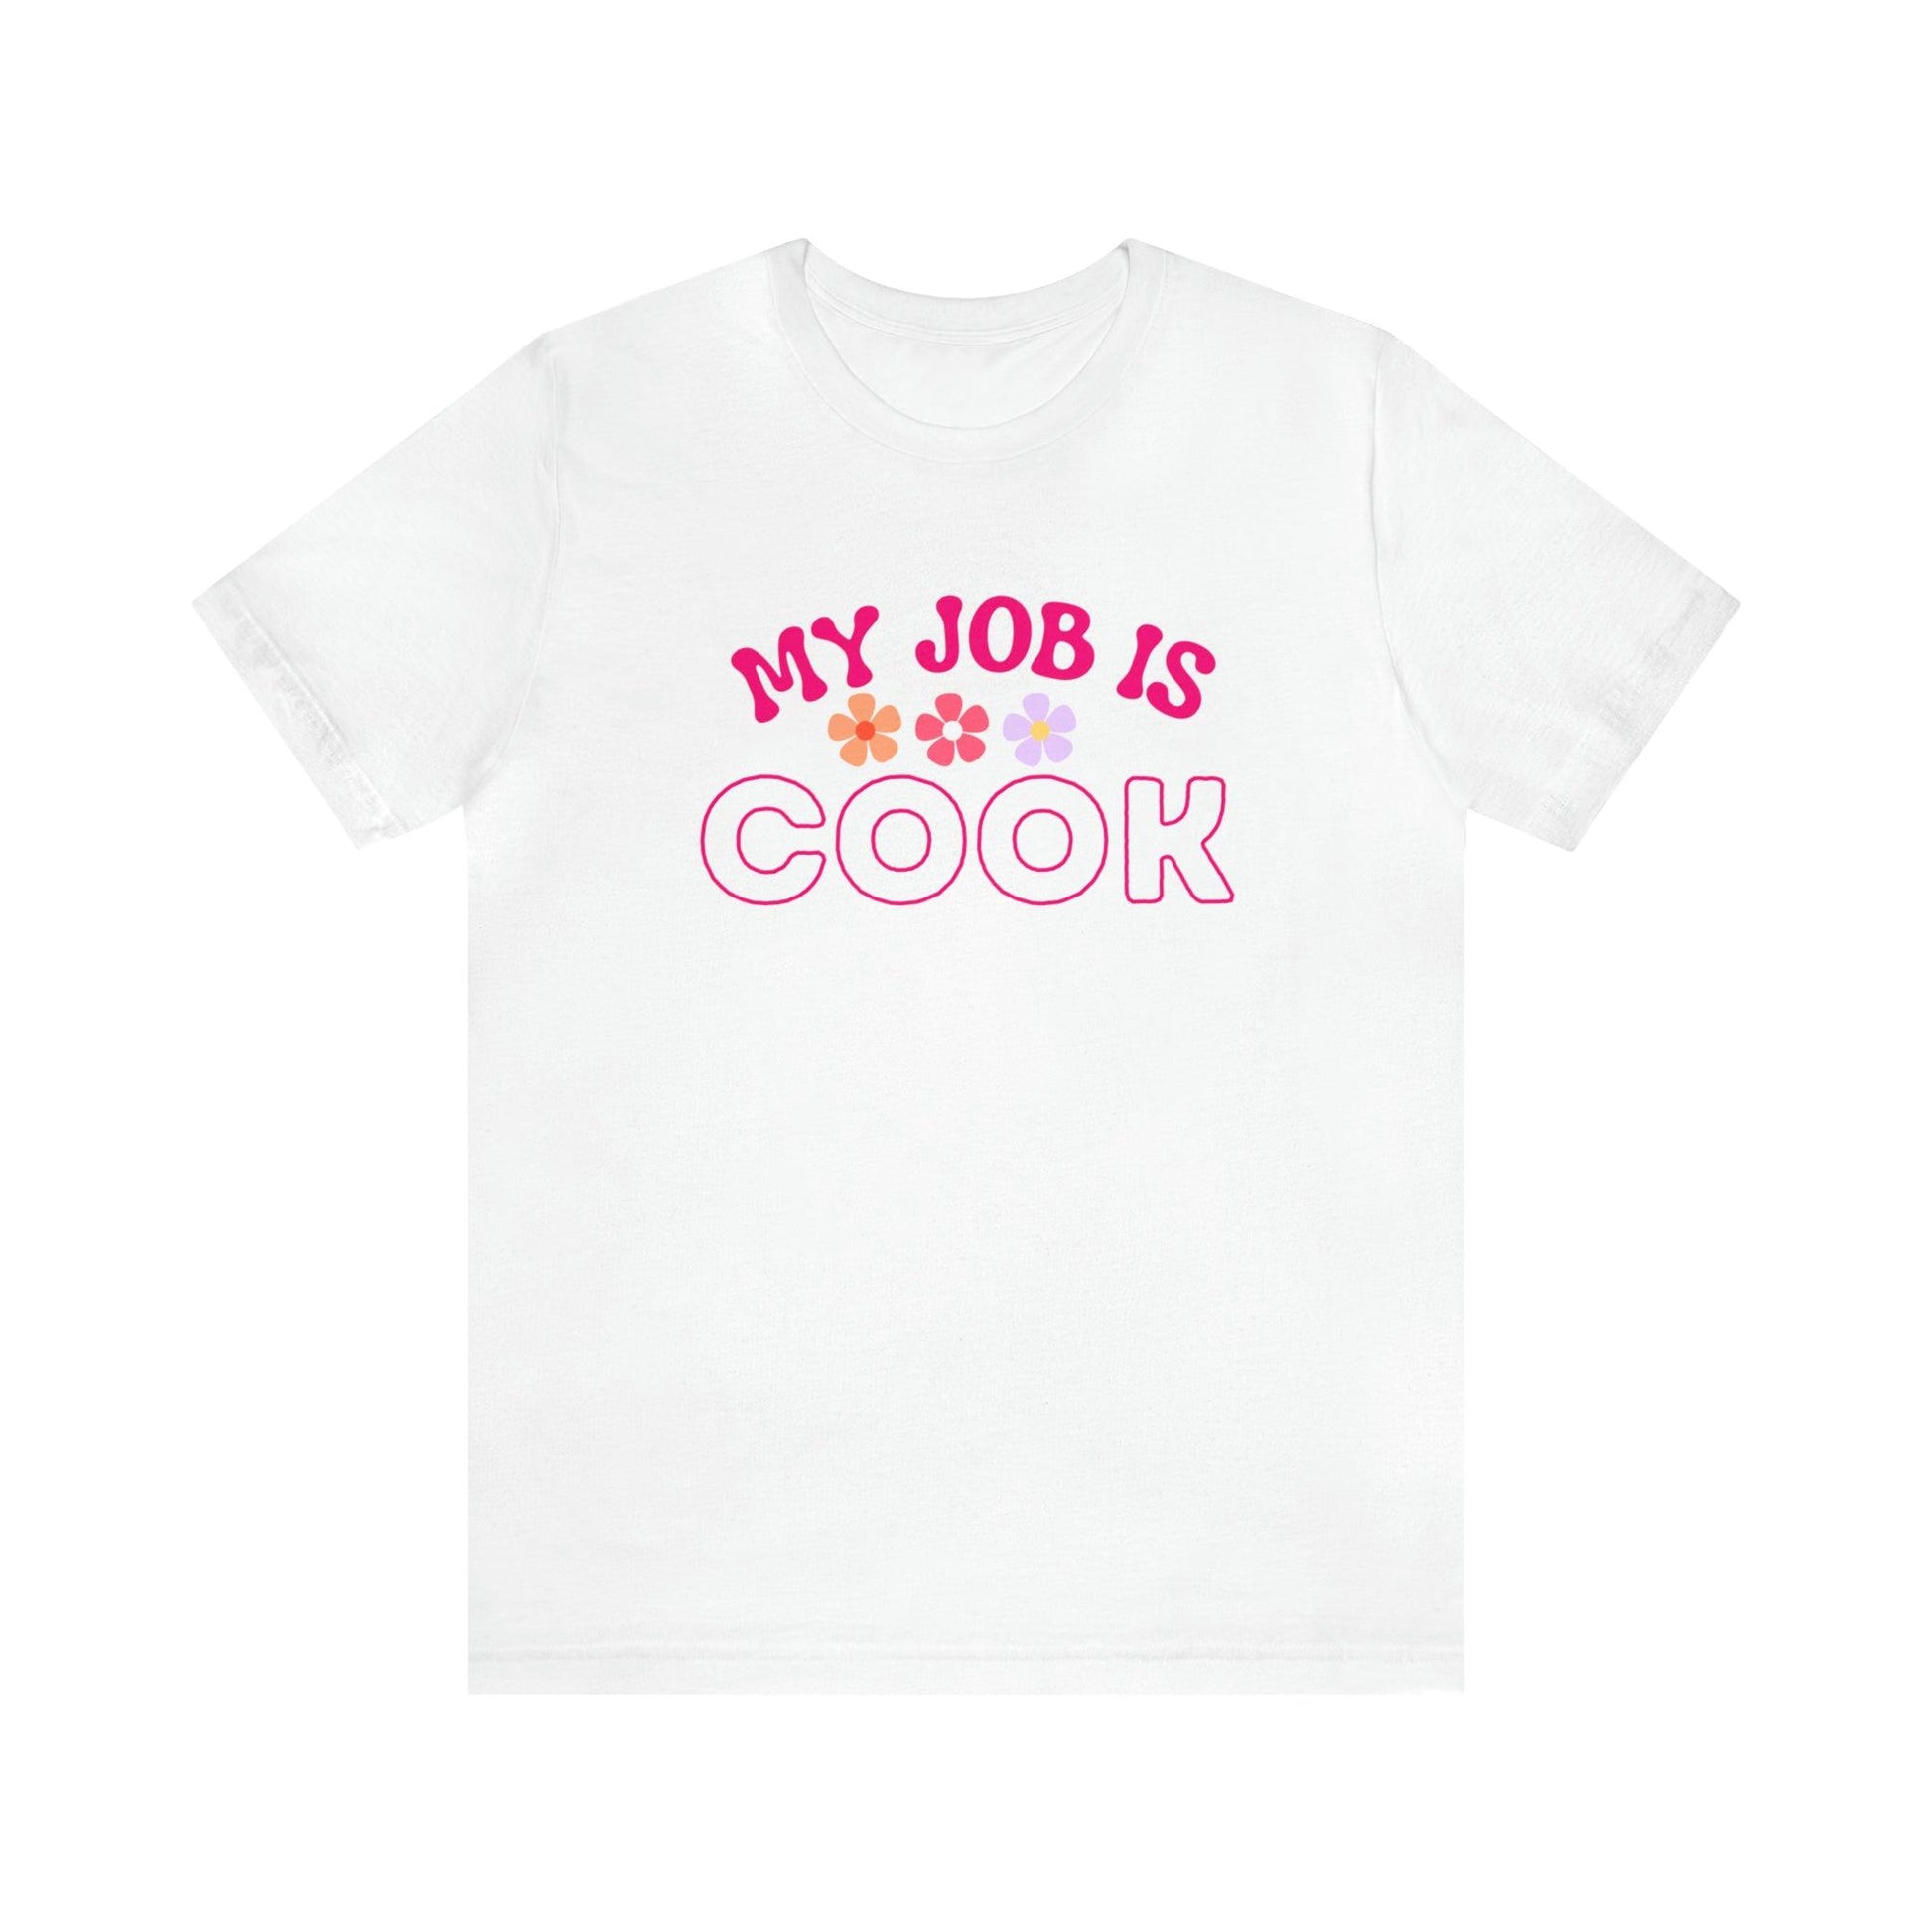 My Job is Cook Shirt Chef Shirt, Restaurant Cook Shirt Mom Shirt Dad Shirt - Giftsmojo